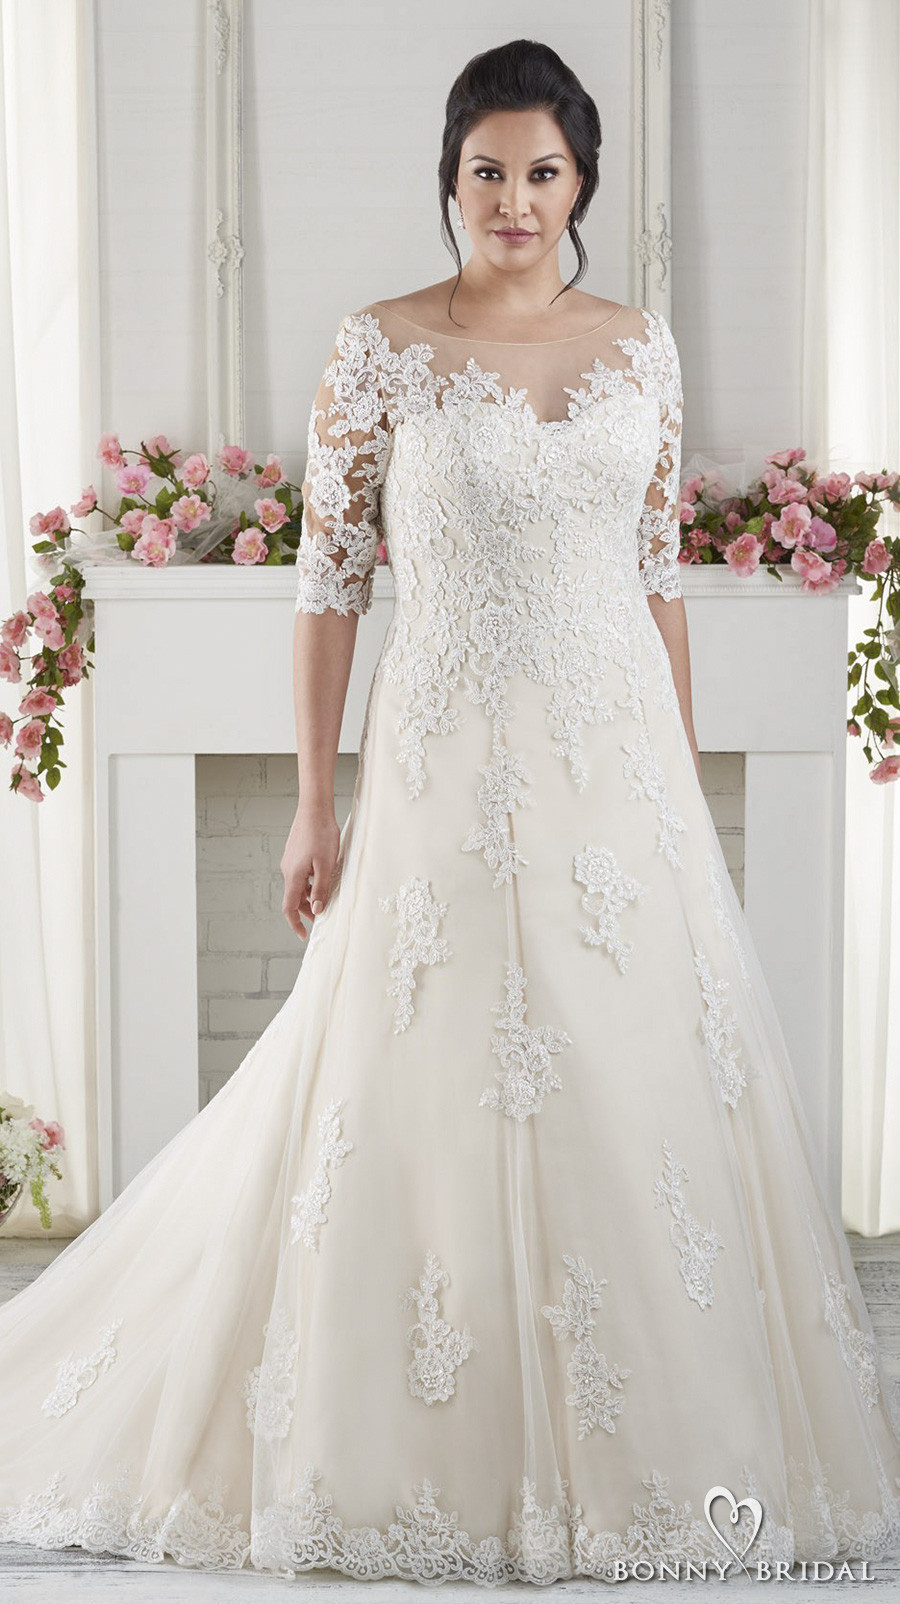 Bonny Wedding Dresses
 Bonny Bridal Wedding Dresses — Unfor table Styles for